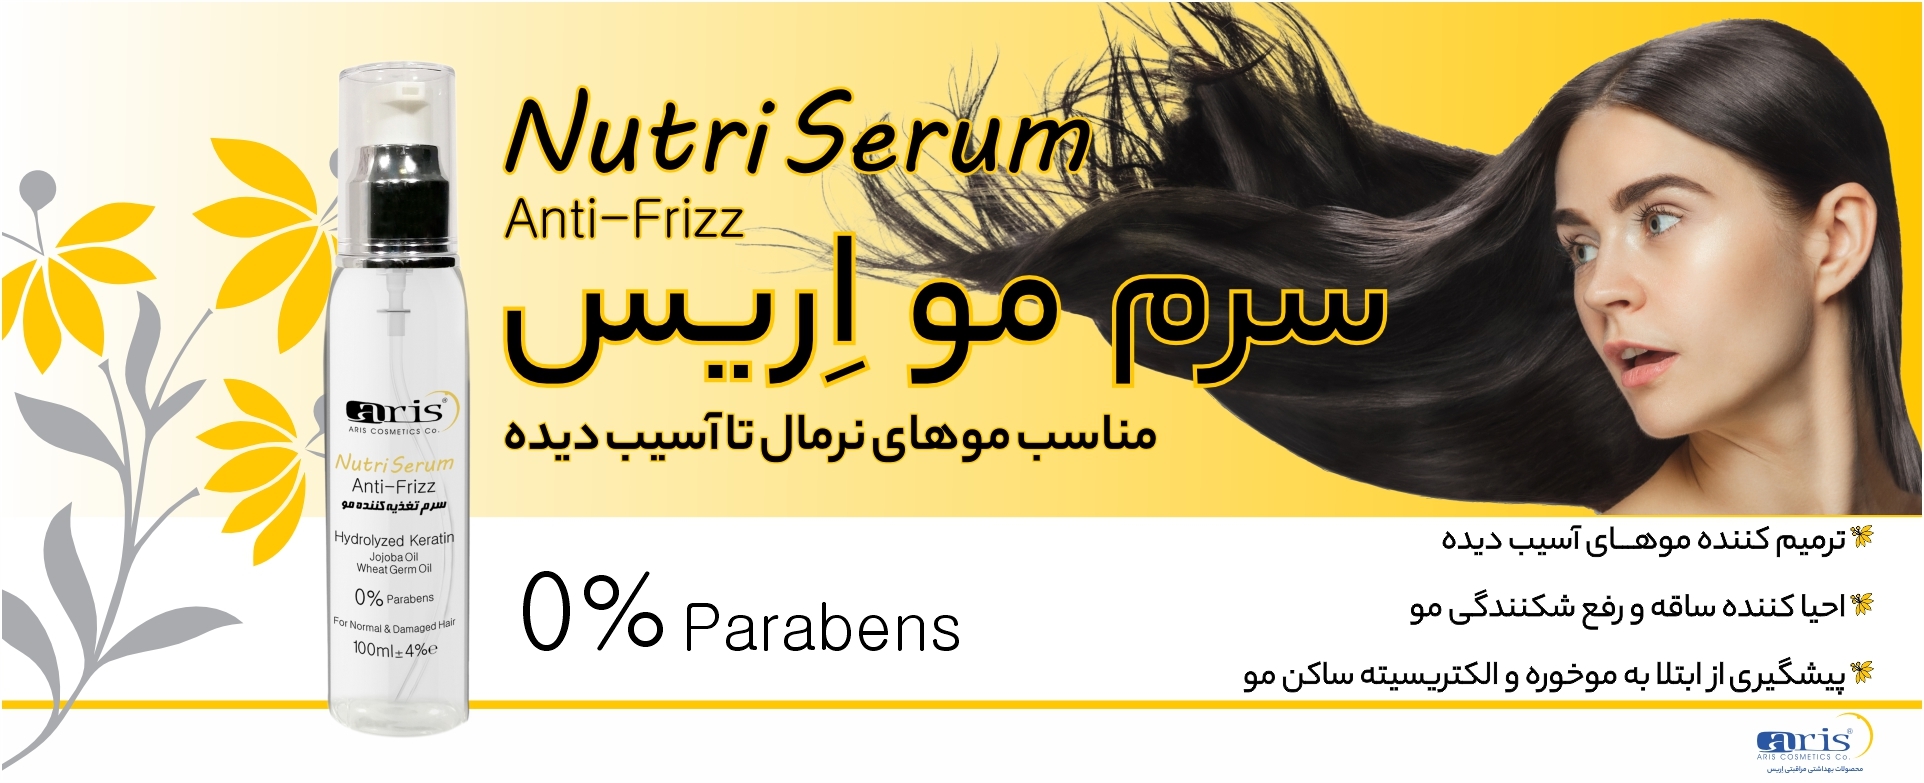 nutri serum banner